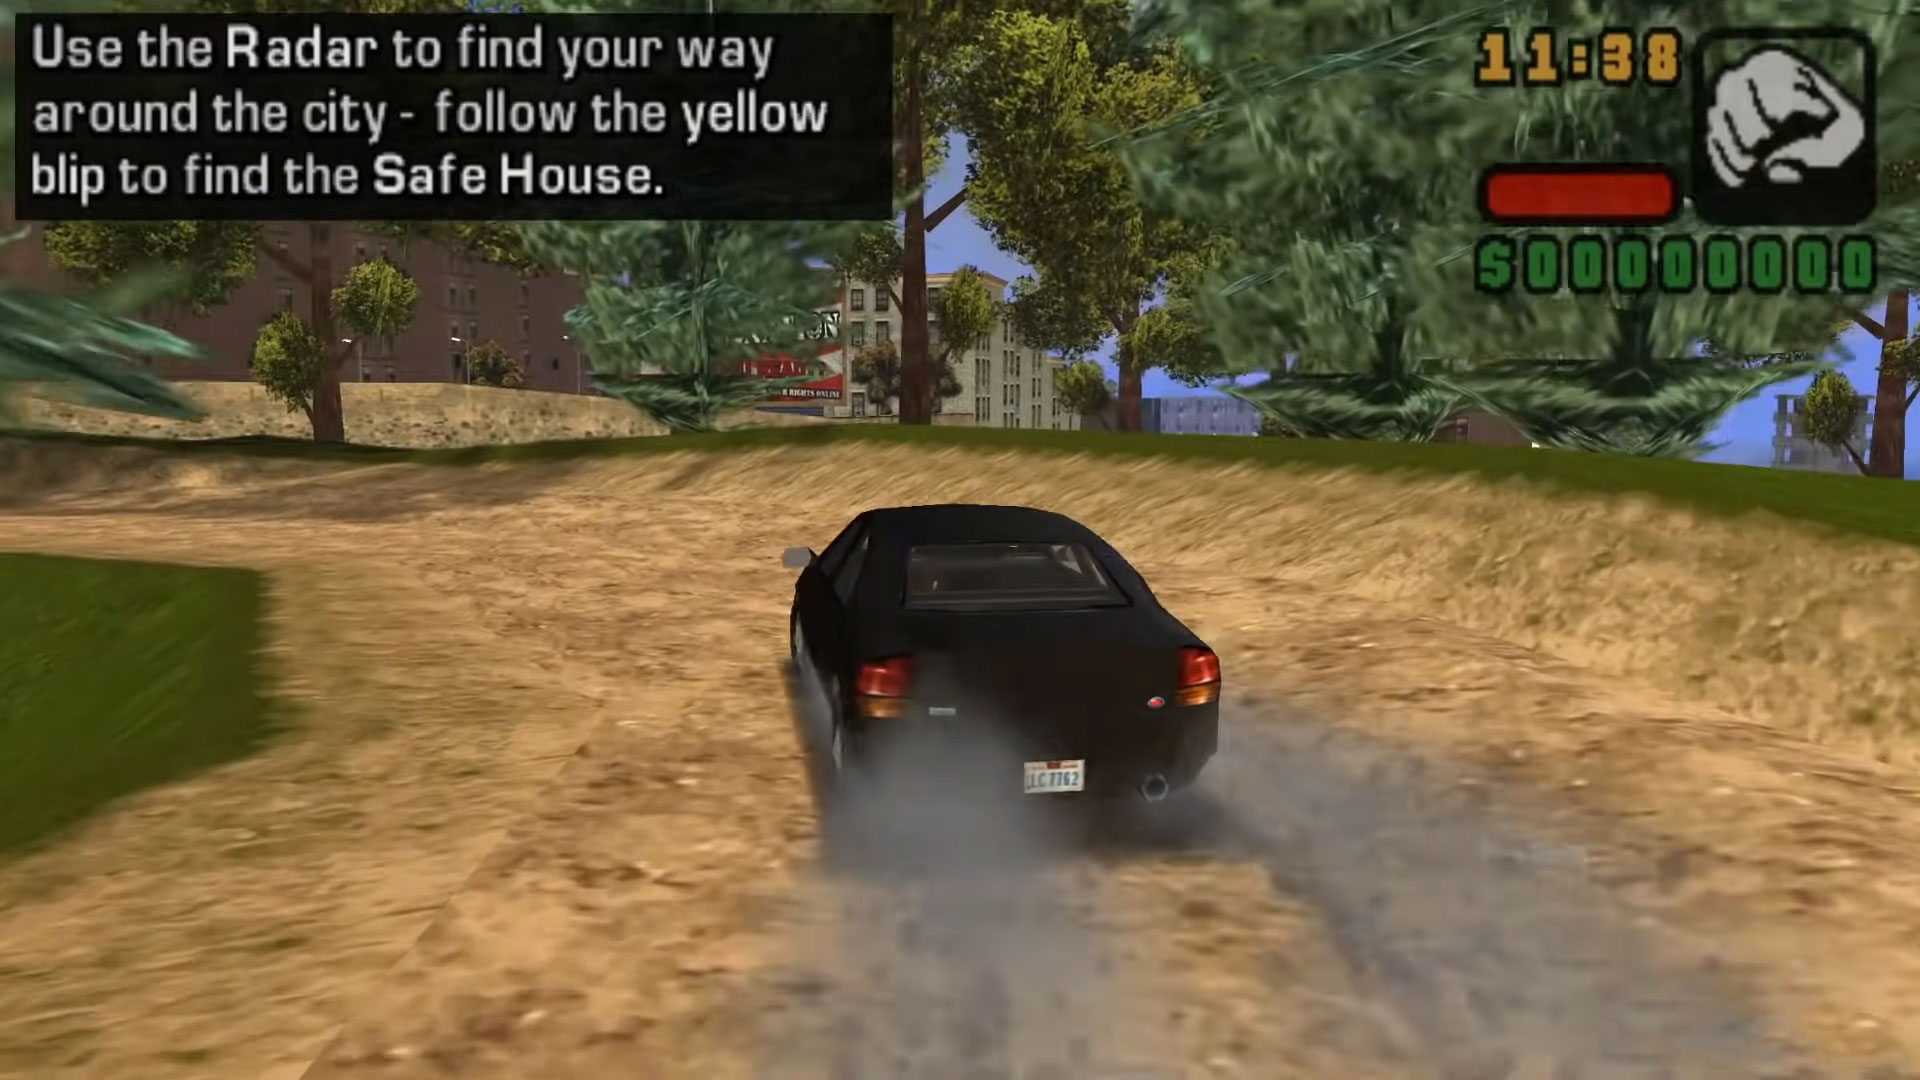 Grand Theft Auto III (Europe) PS2 ISO - CDRomance